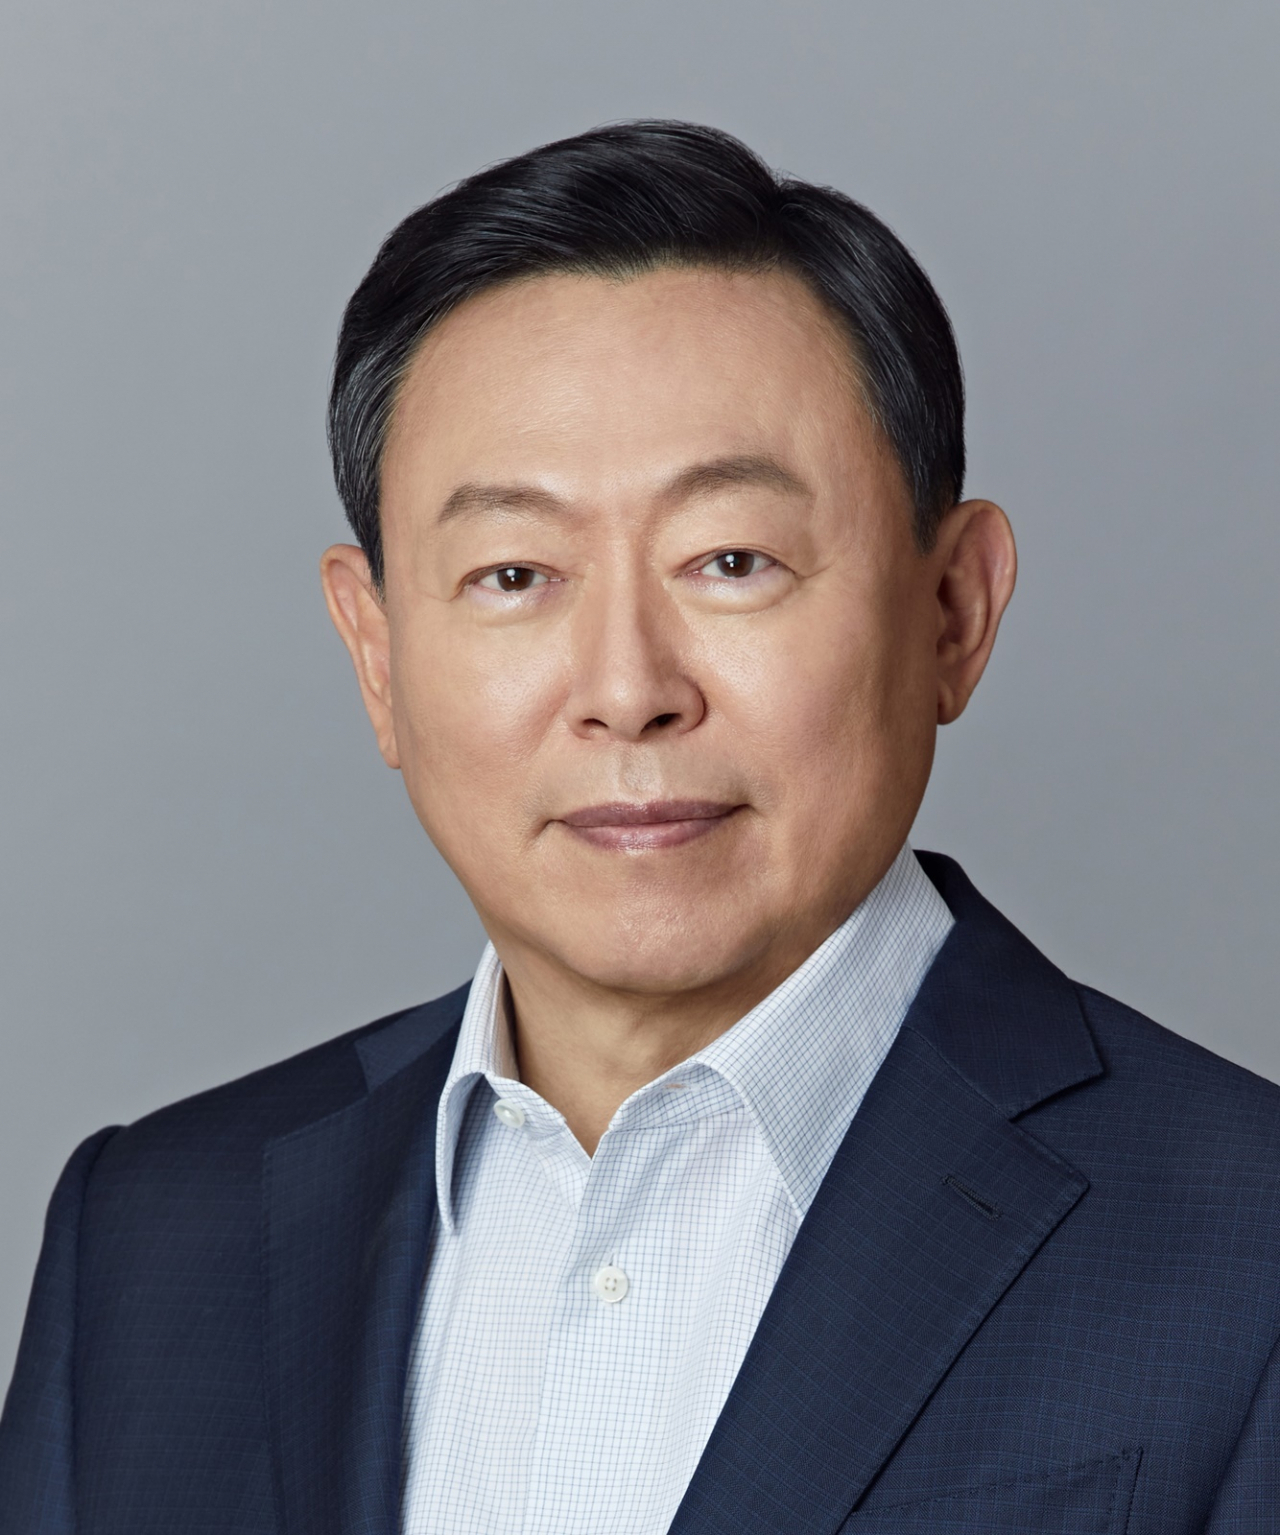 Lotte Group Chairman Shin Dong-bin (Lotte Group)